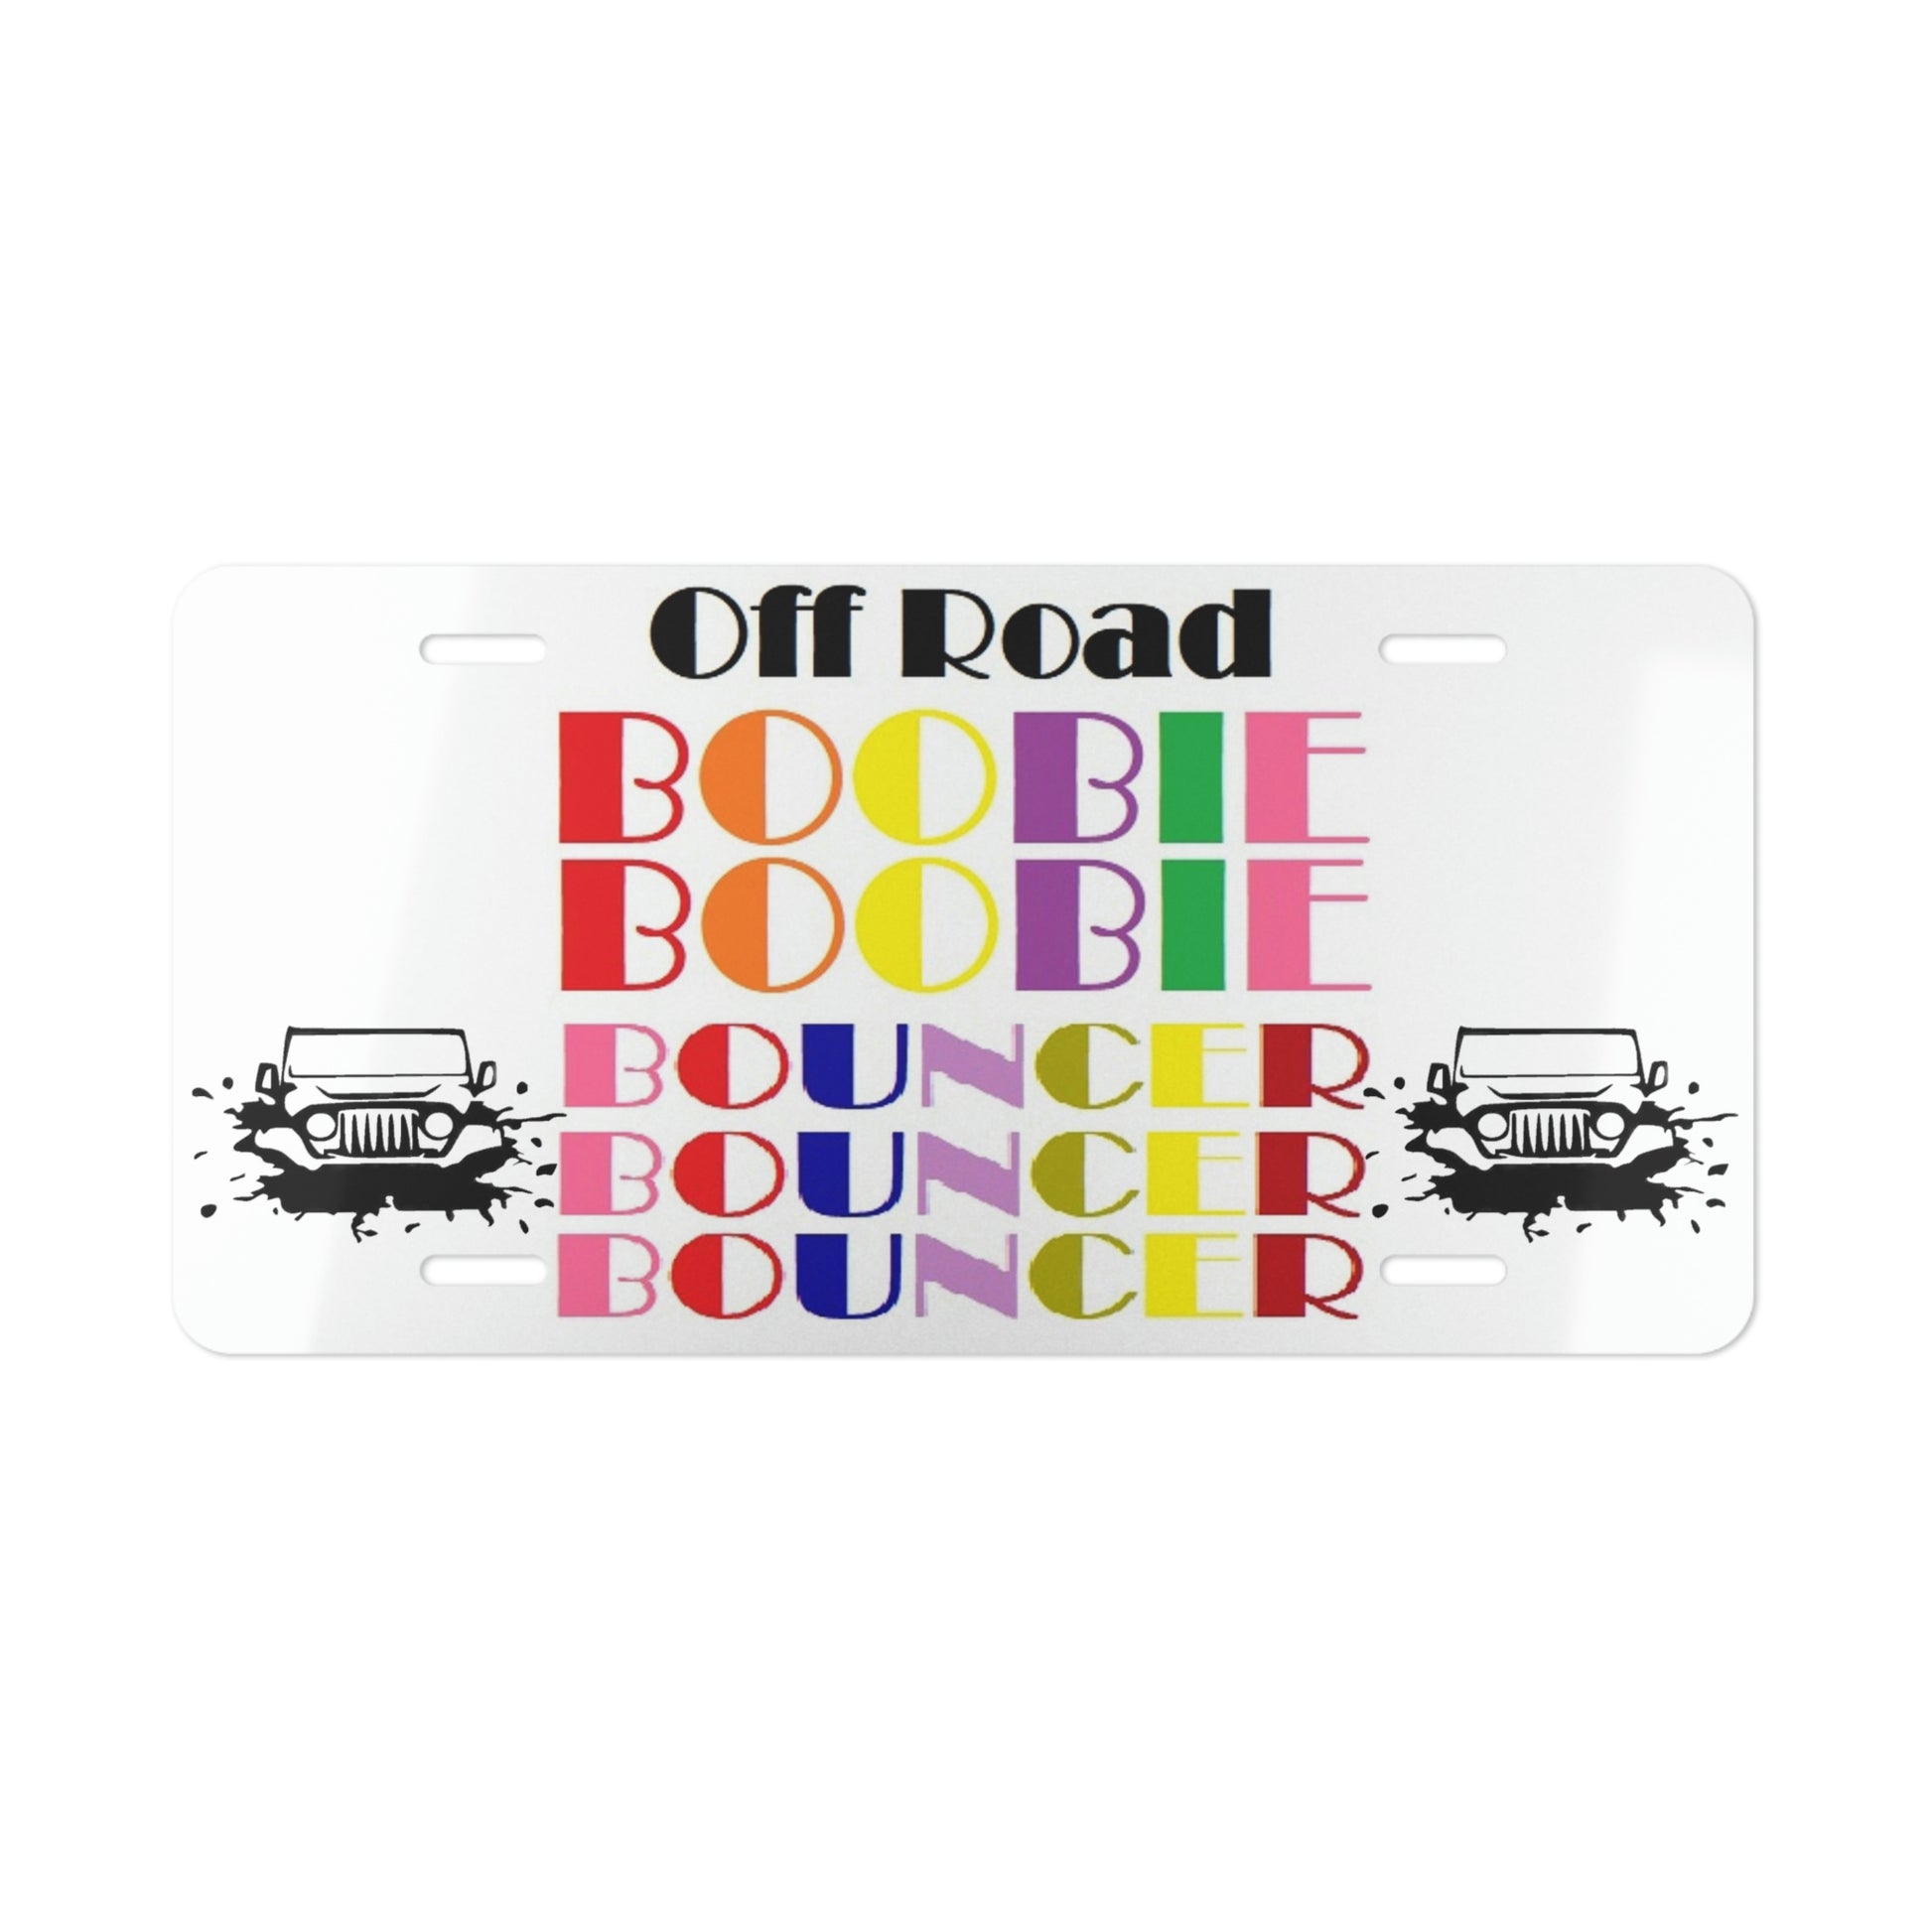 Offroad Boobie Bouncer 4X4 Vanity License Plate